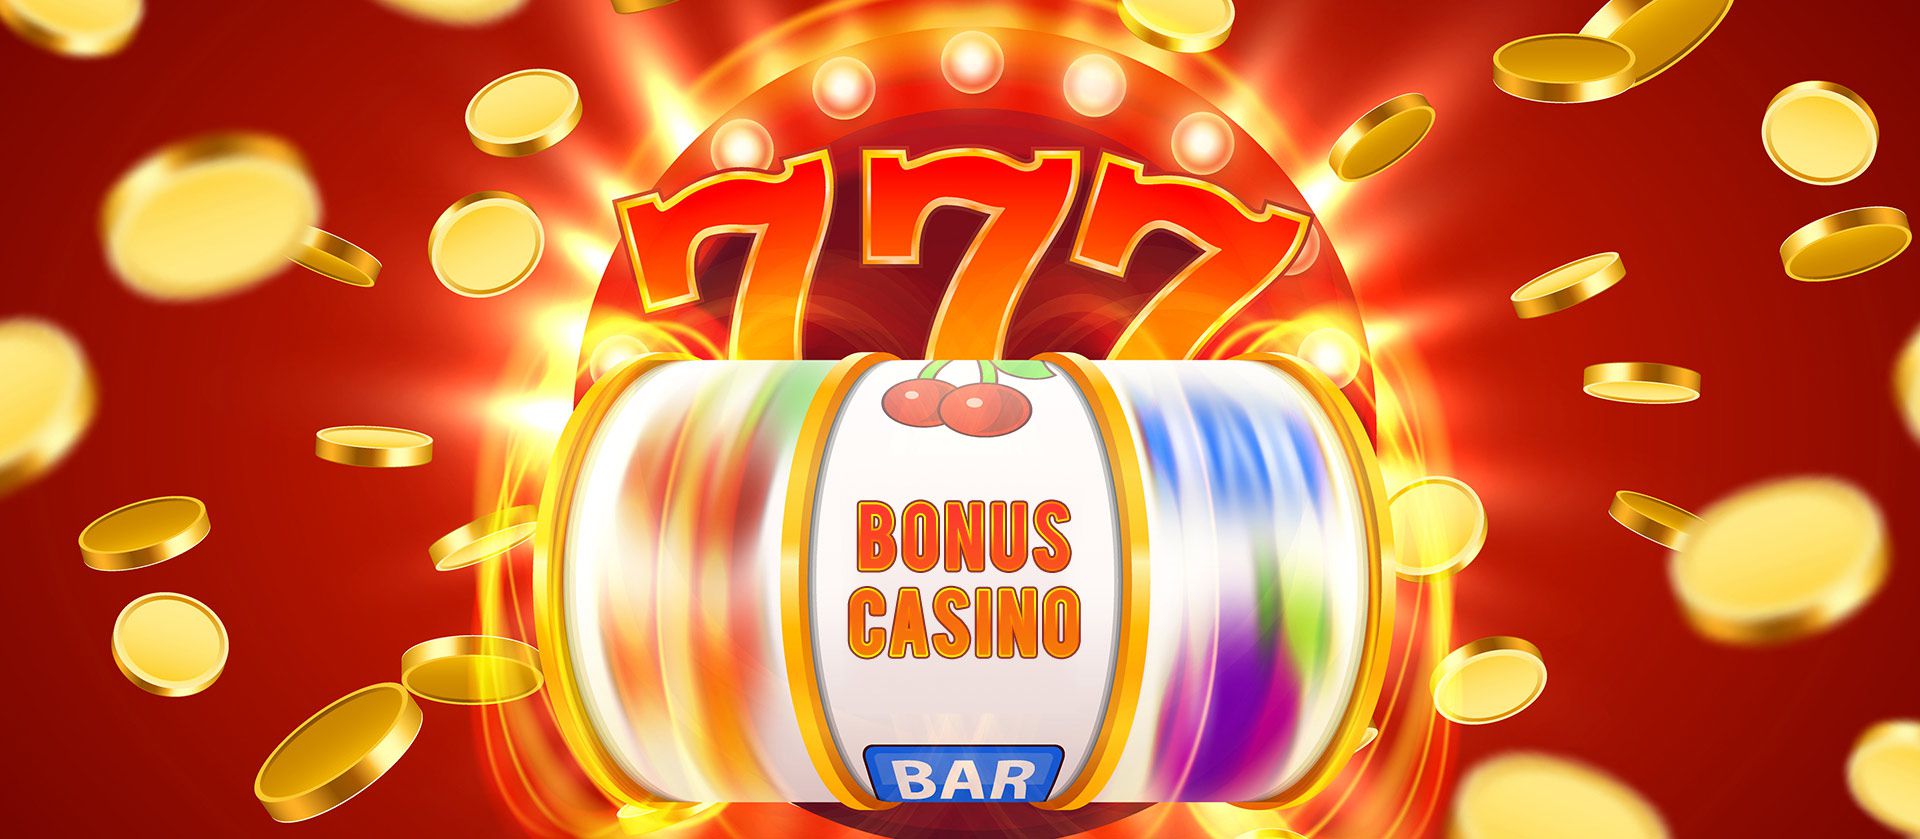 Bonuses in casino apps for iPhone.